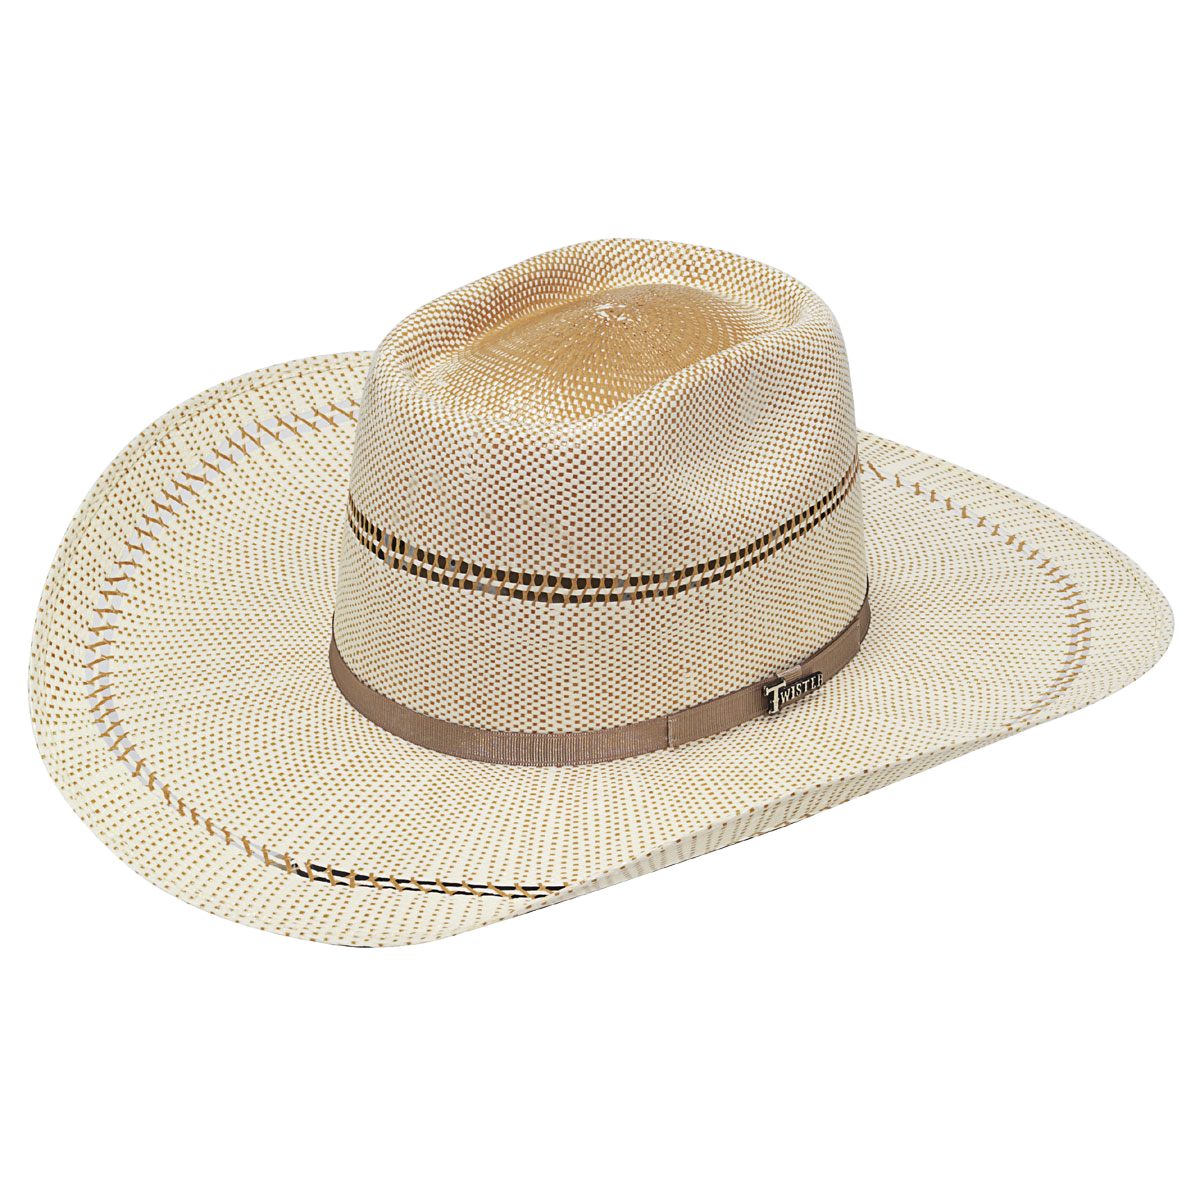 Twister Unisex Bangora Natural Straw Cowboy Hat T71225